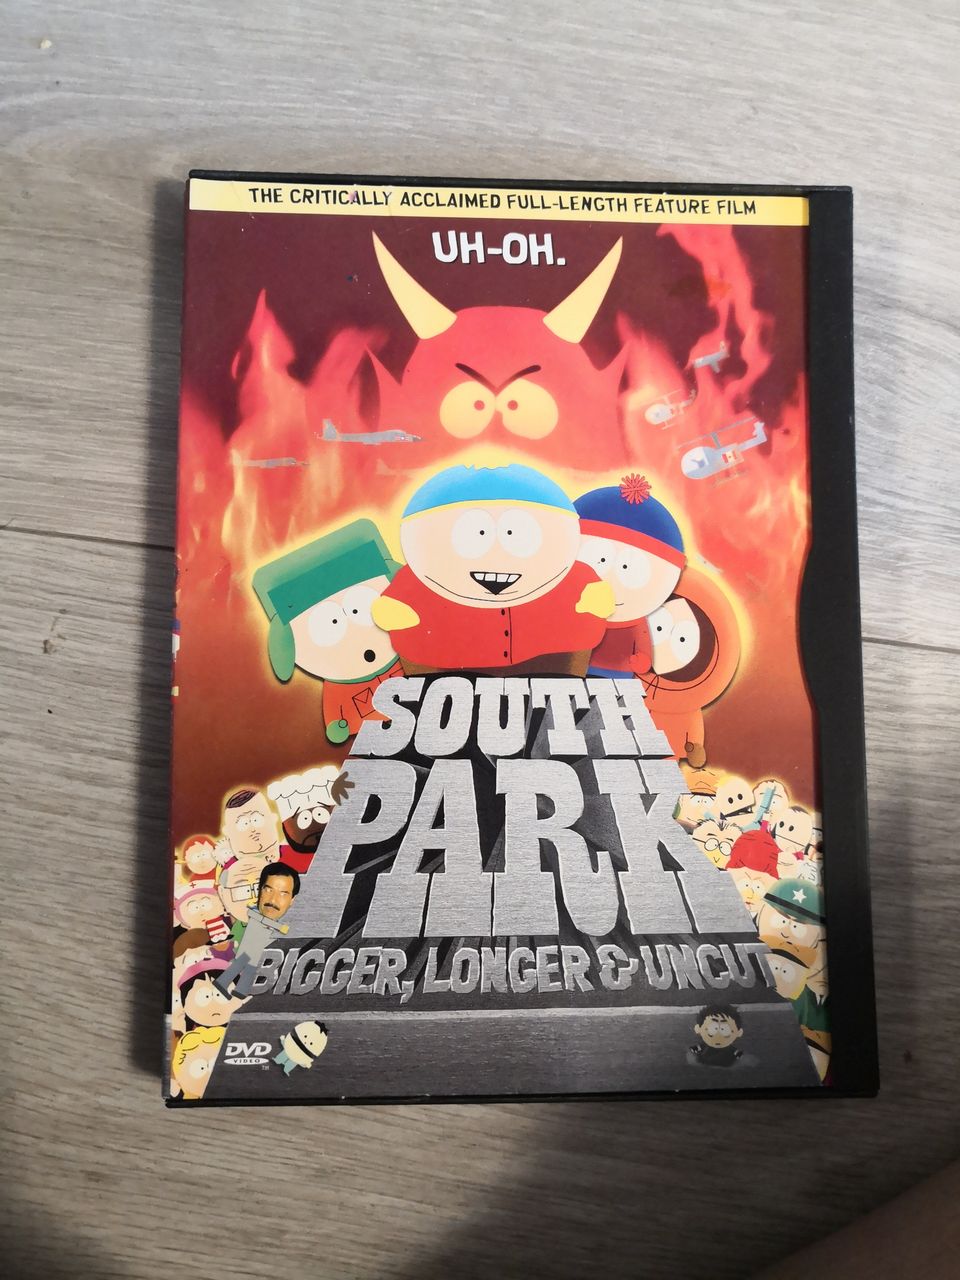 South Park Bigger, Longer & Uncut DVD